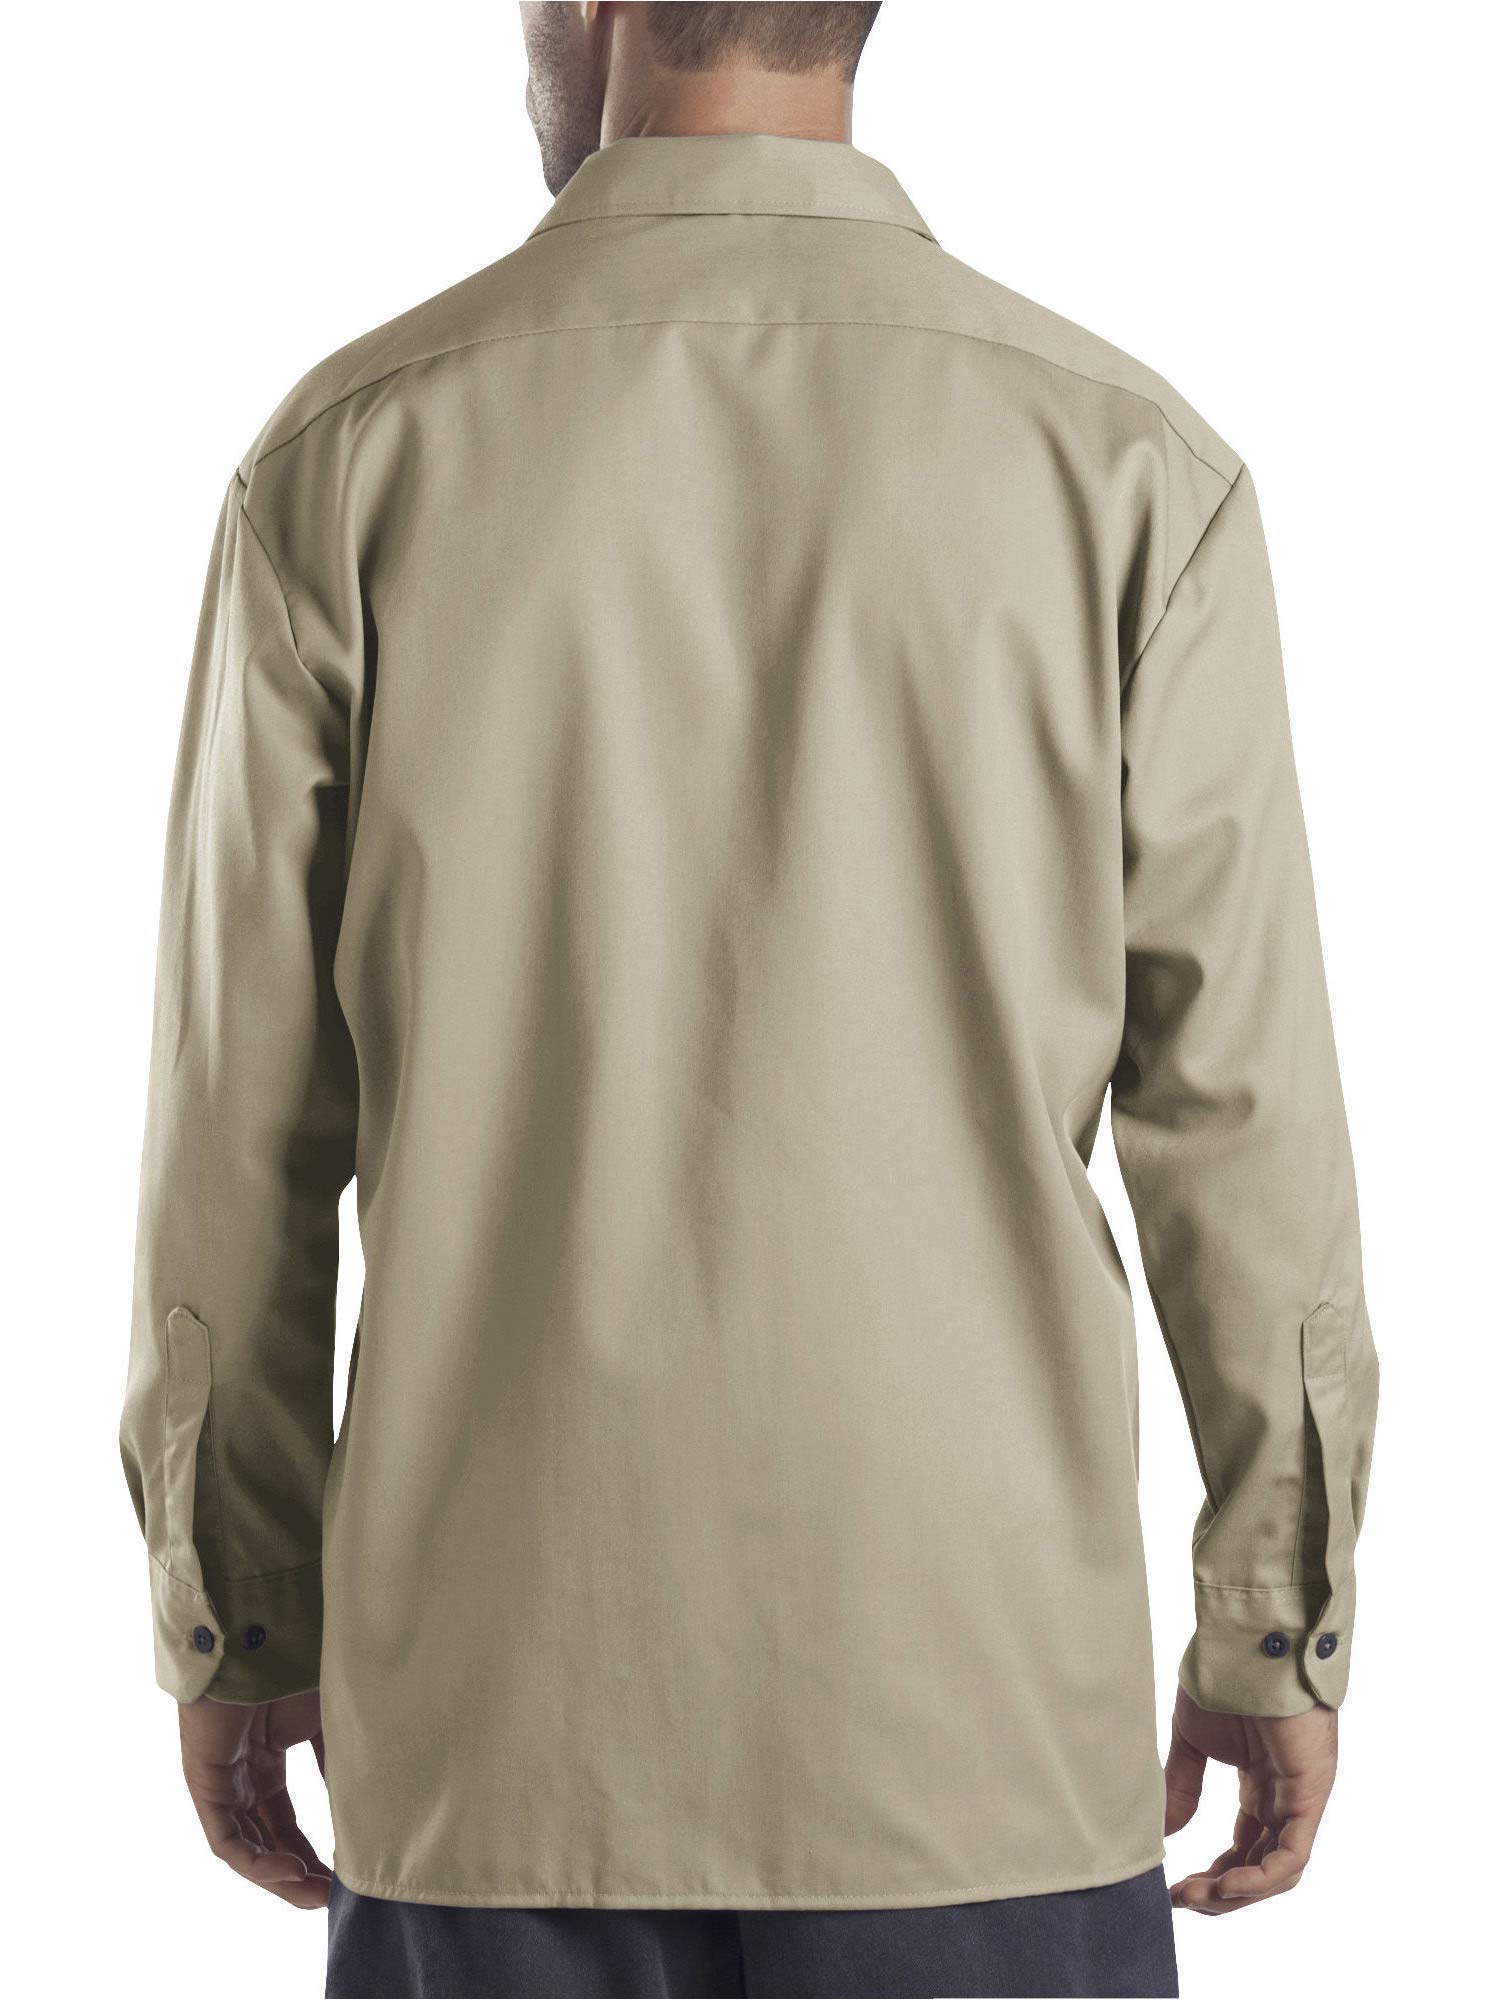 Dickies Original Fit Long Sleeve Button Front Work Shirt - 574